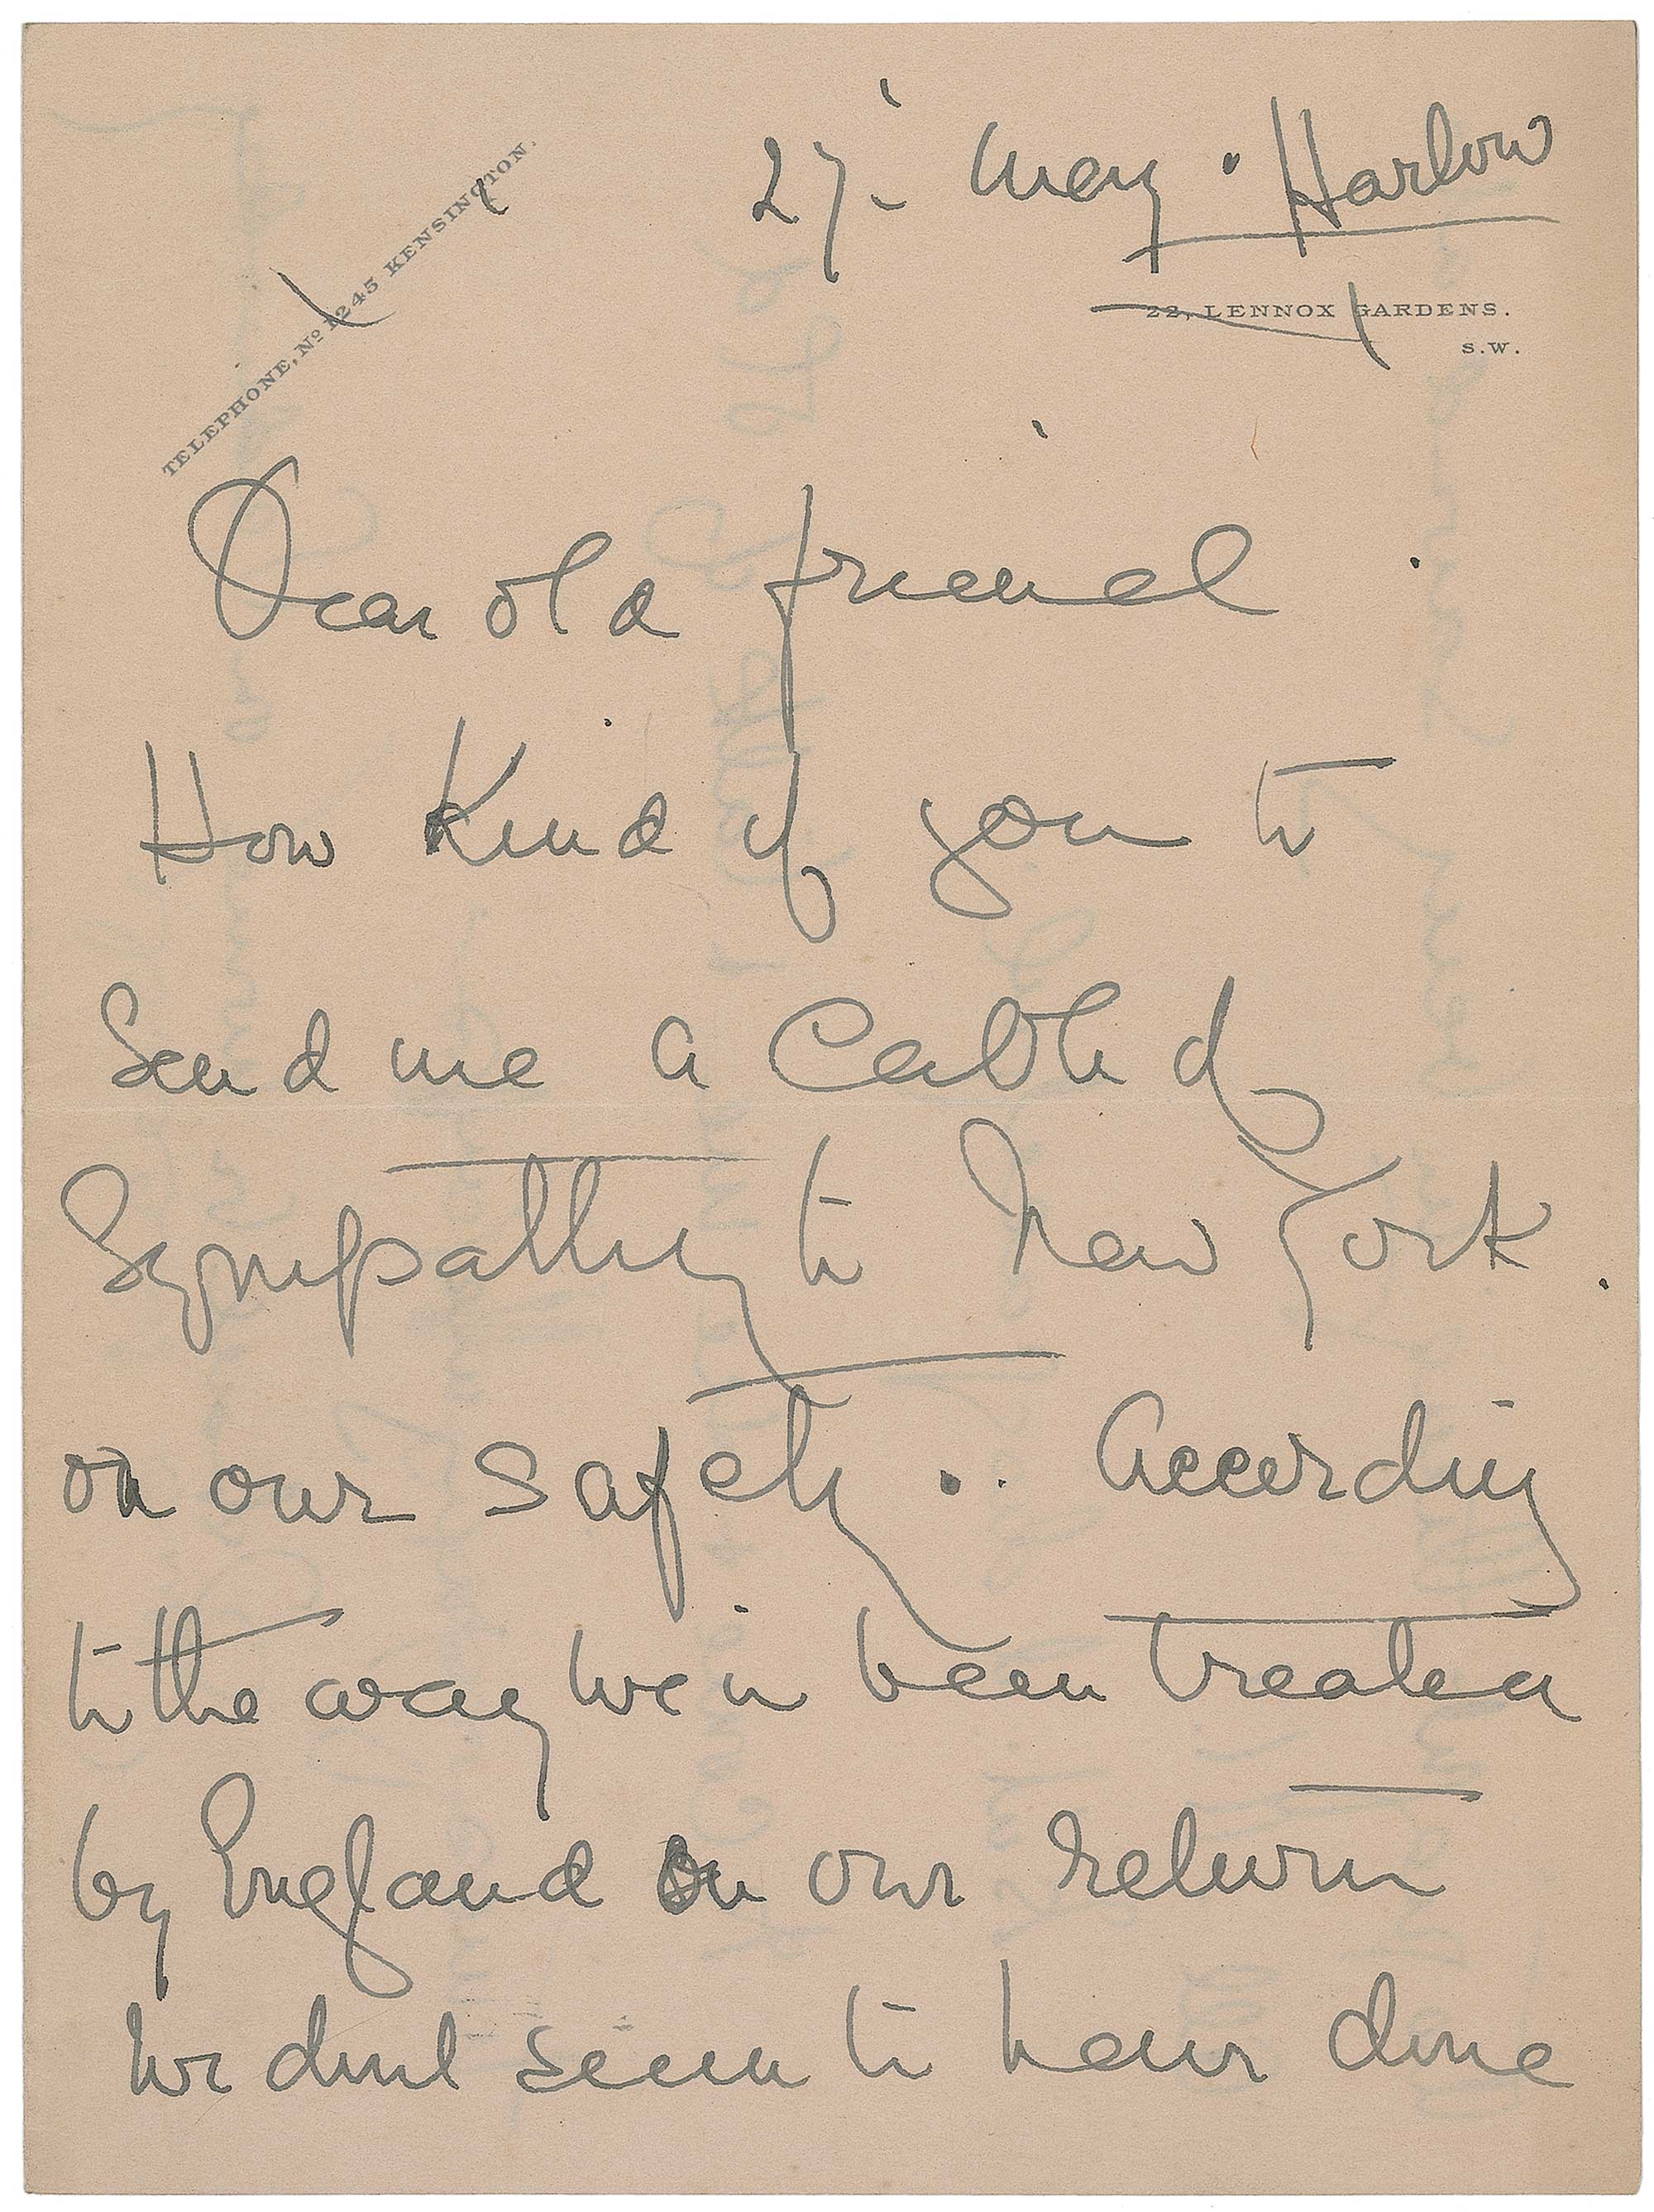 Lady Duff Gordon's letter